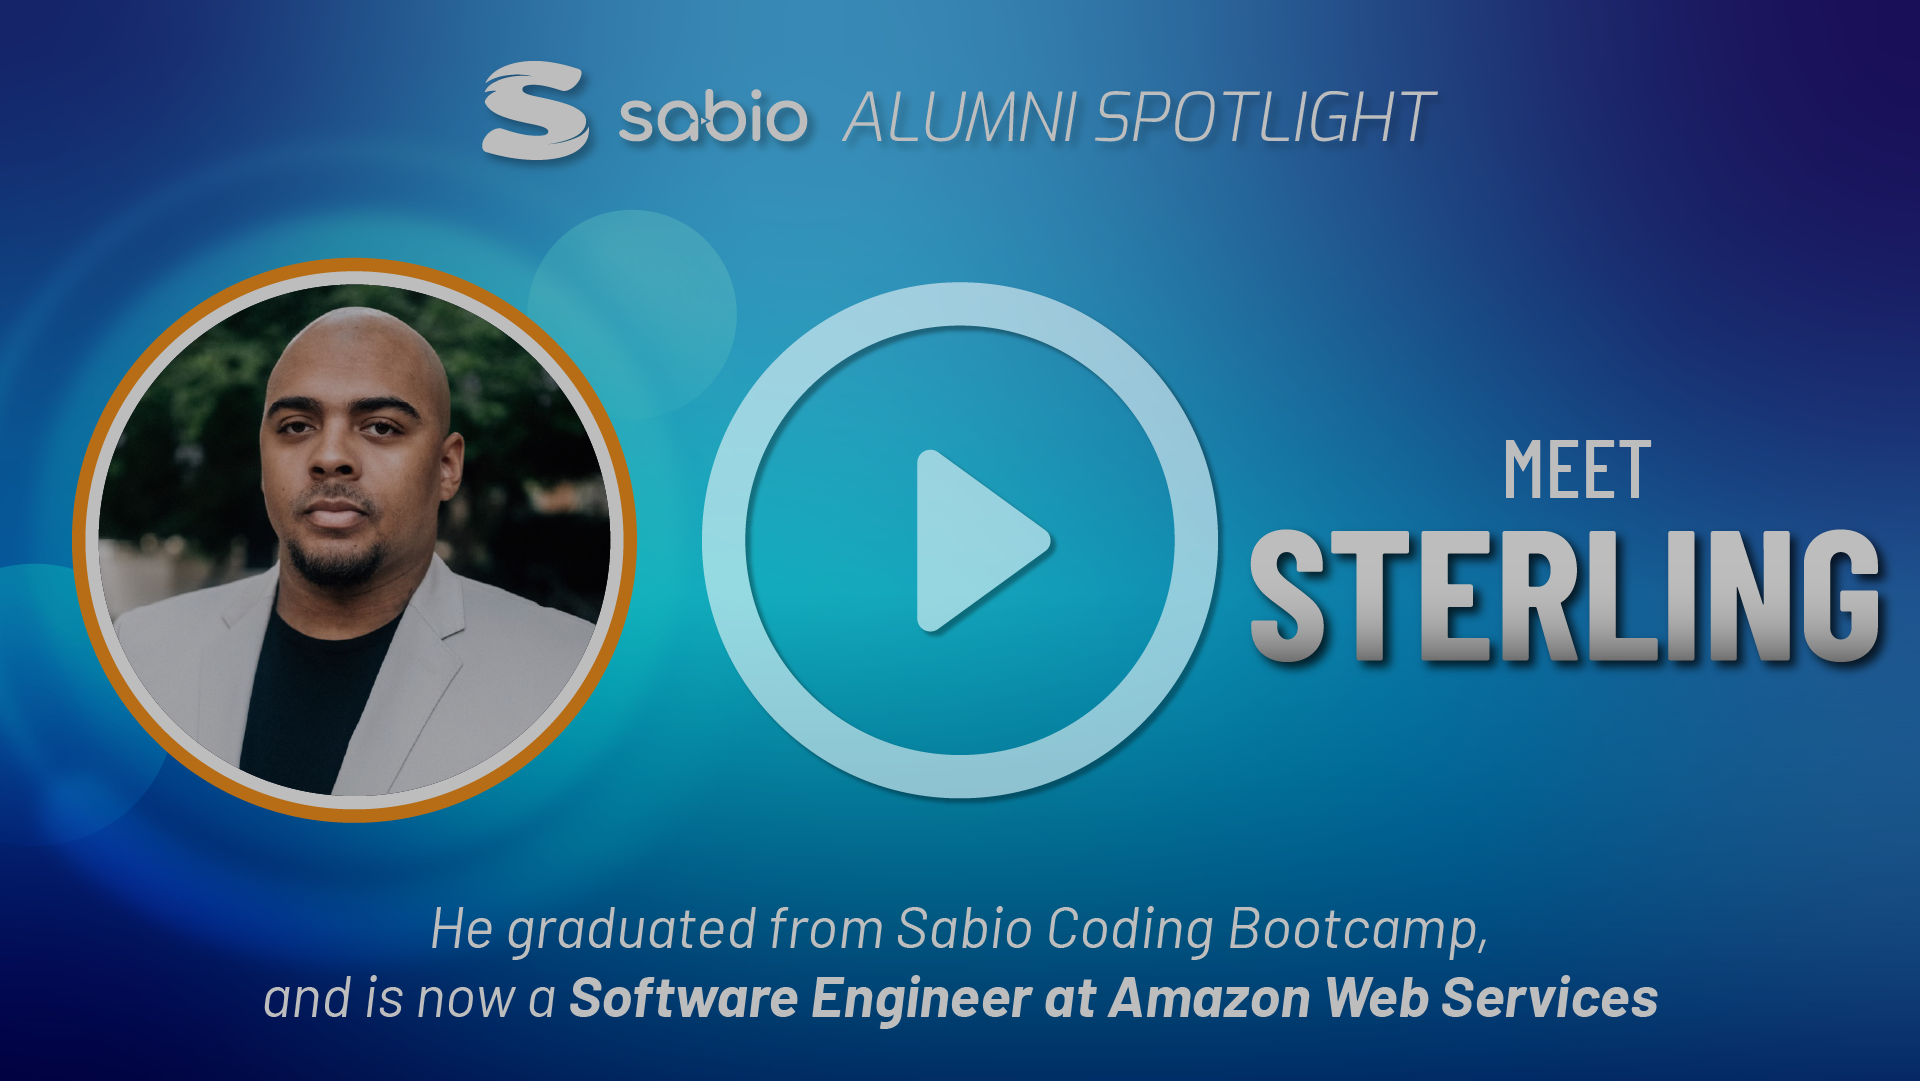 Sabio Alumni Spotlight: Sterling. Play symbol overlaid to the image.